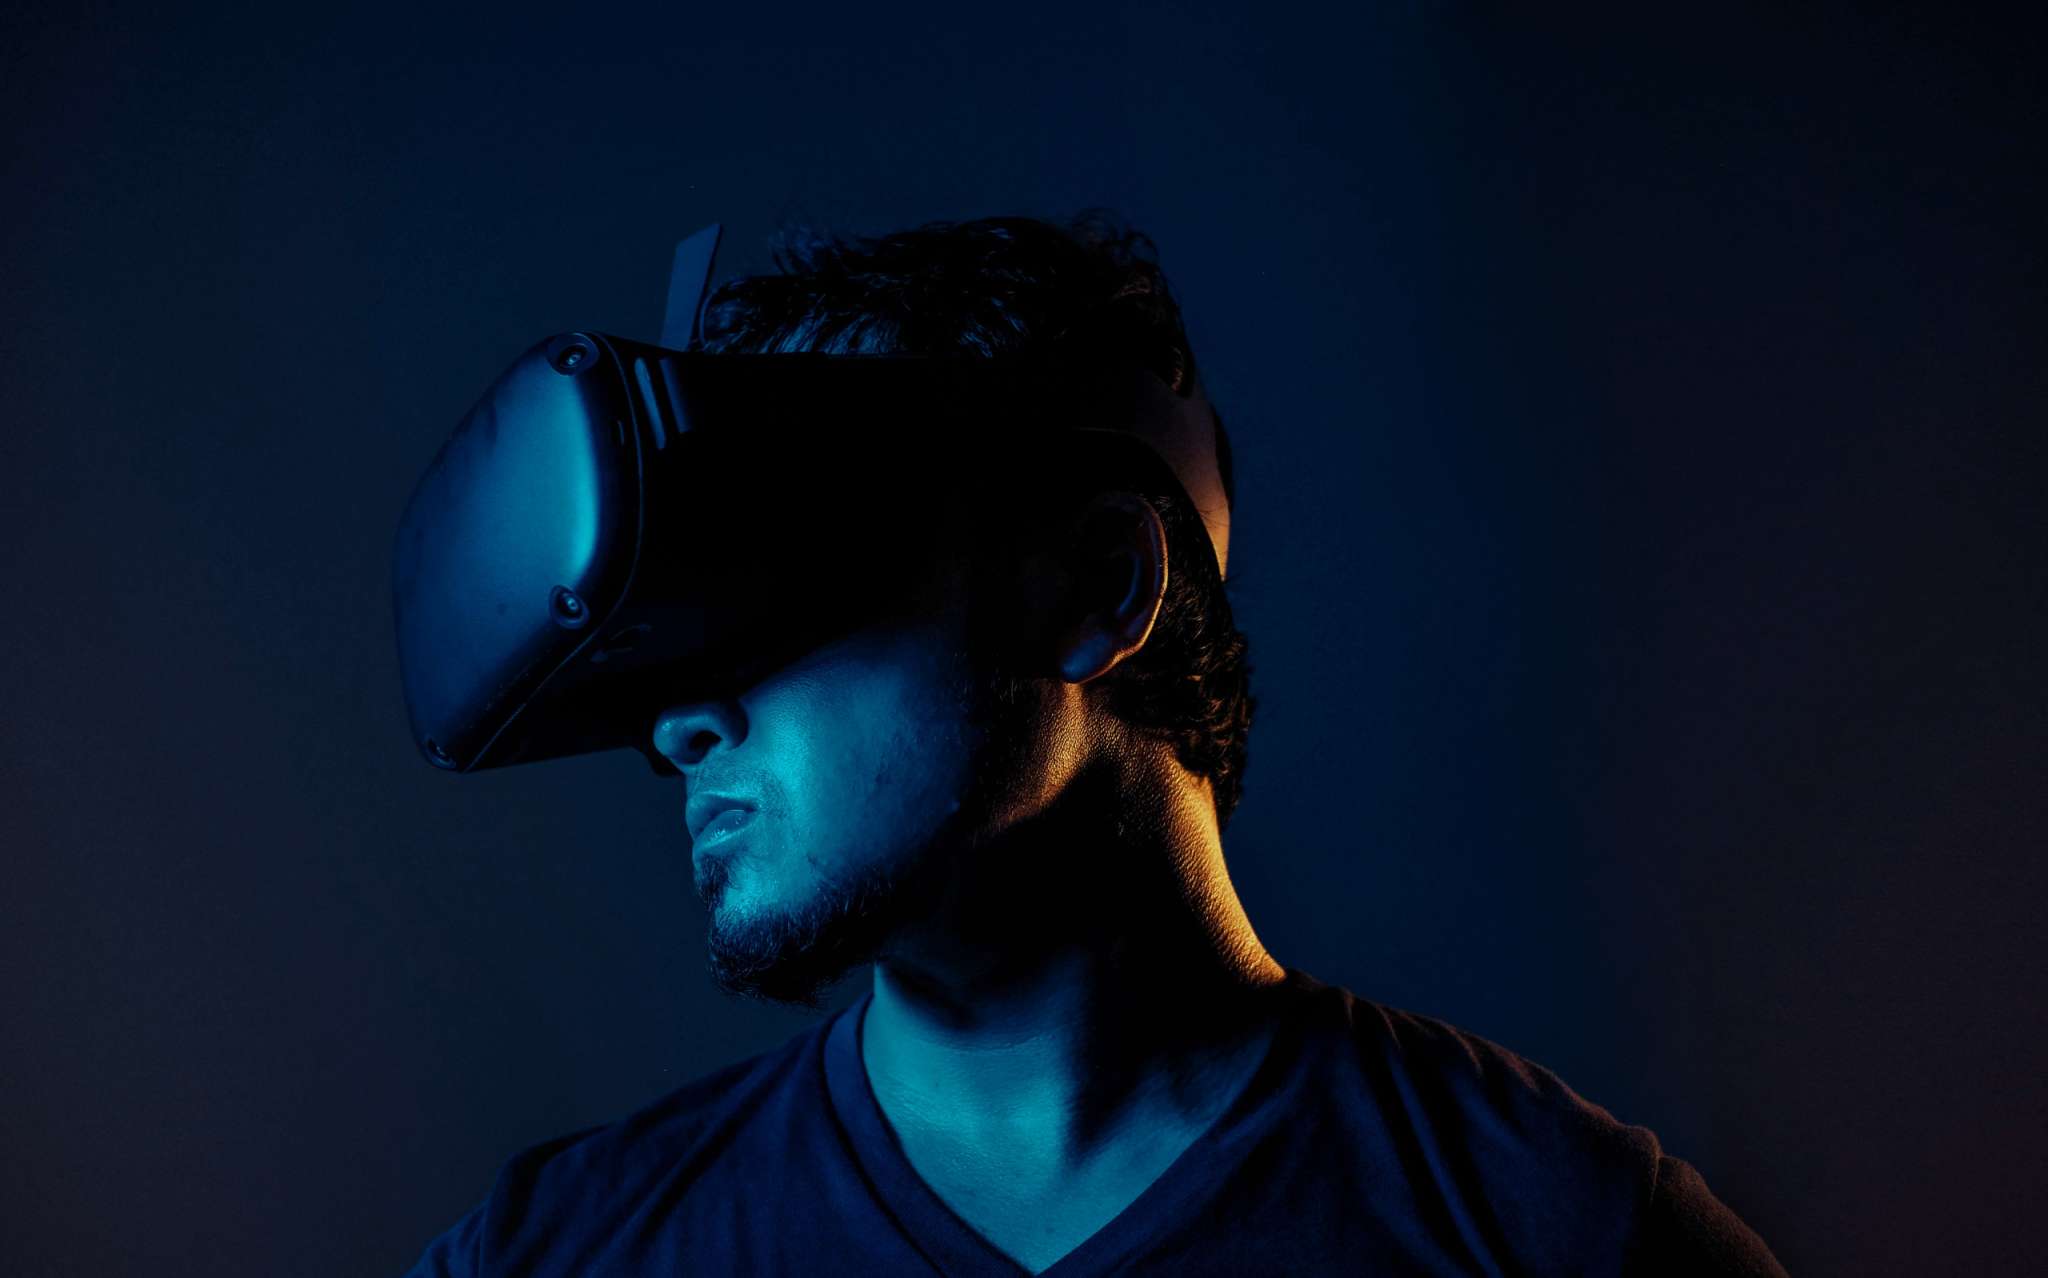 Virtual reality.